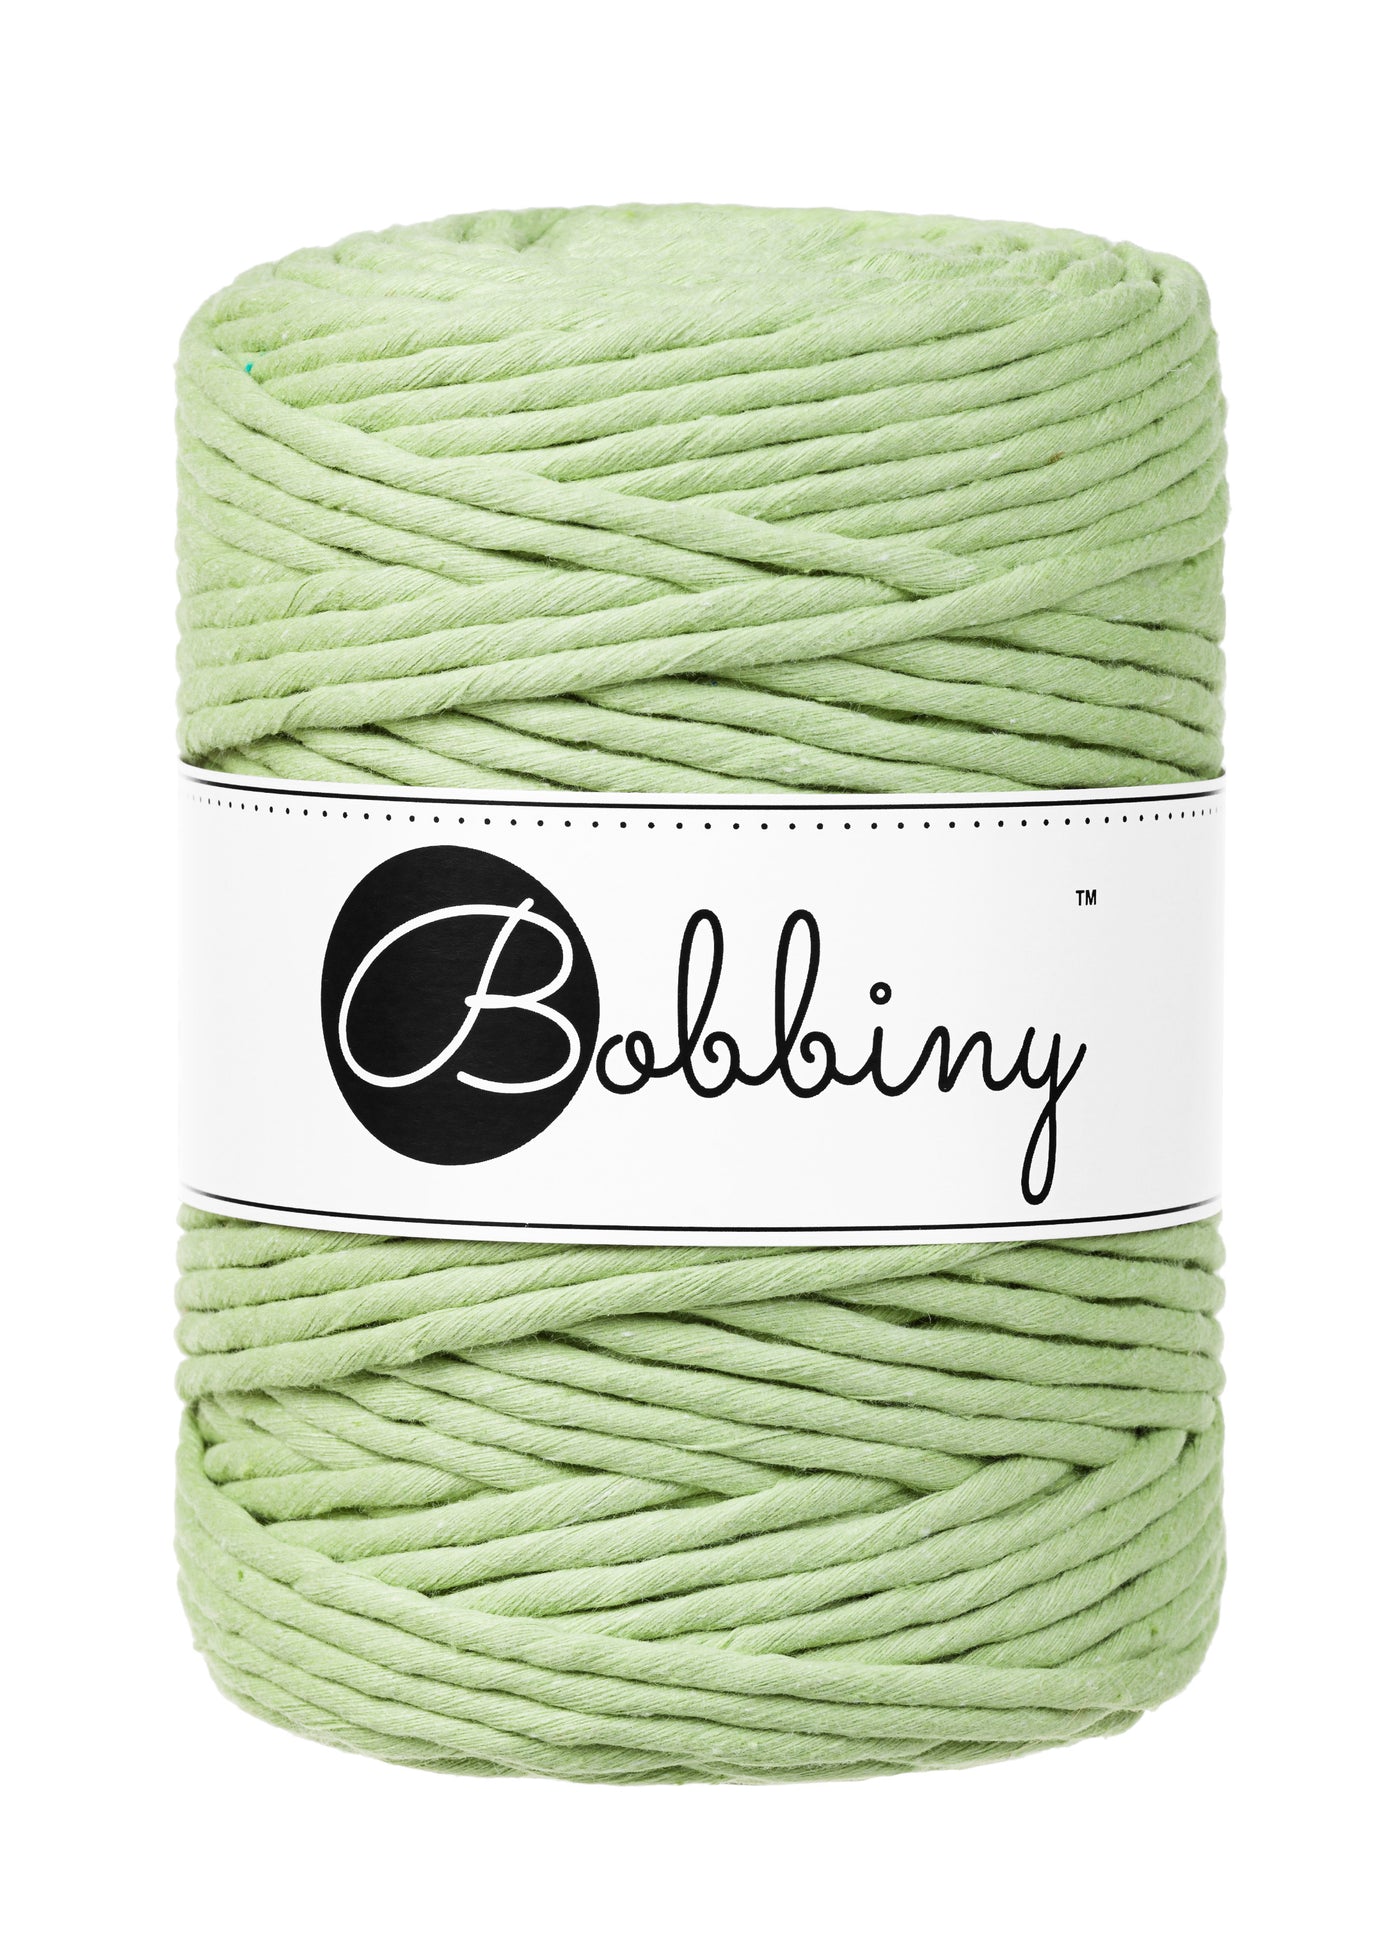 Bobbiny single twist cord in green matcha shade 